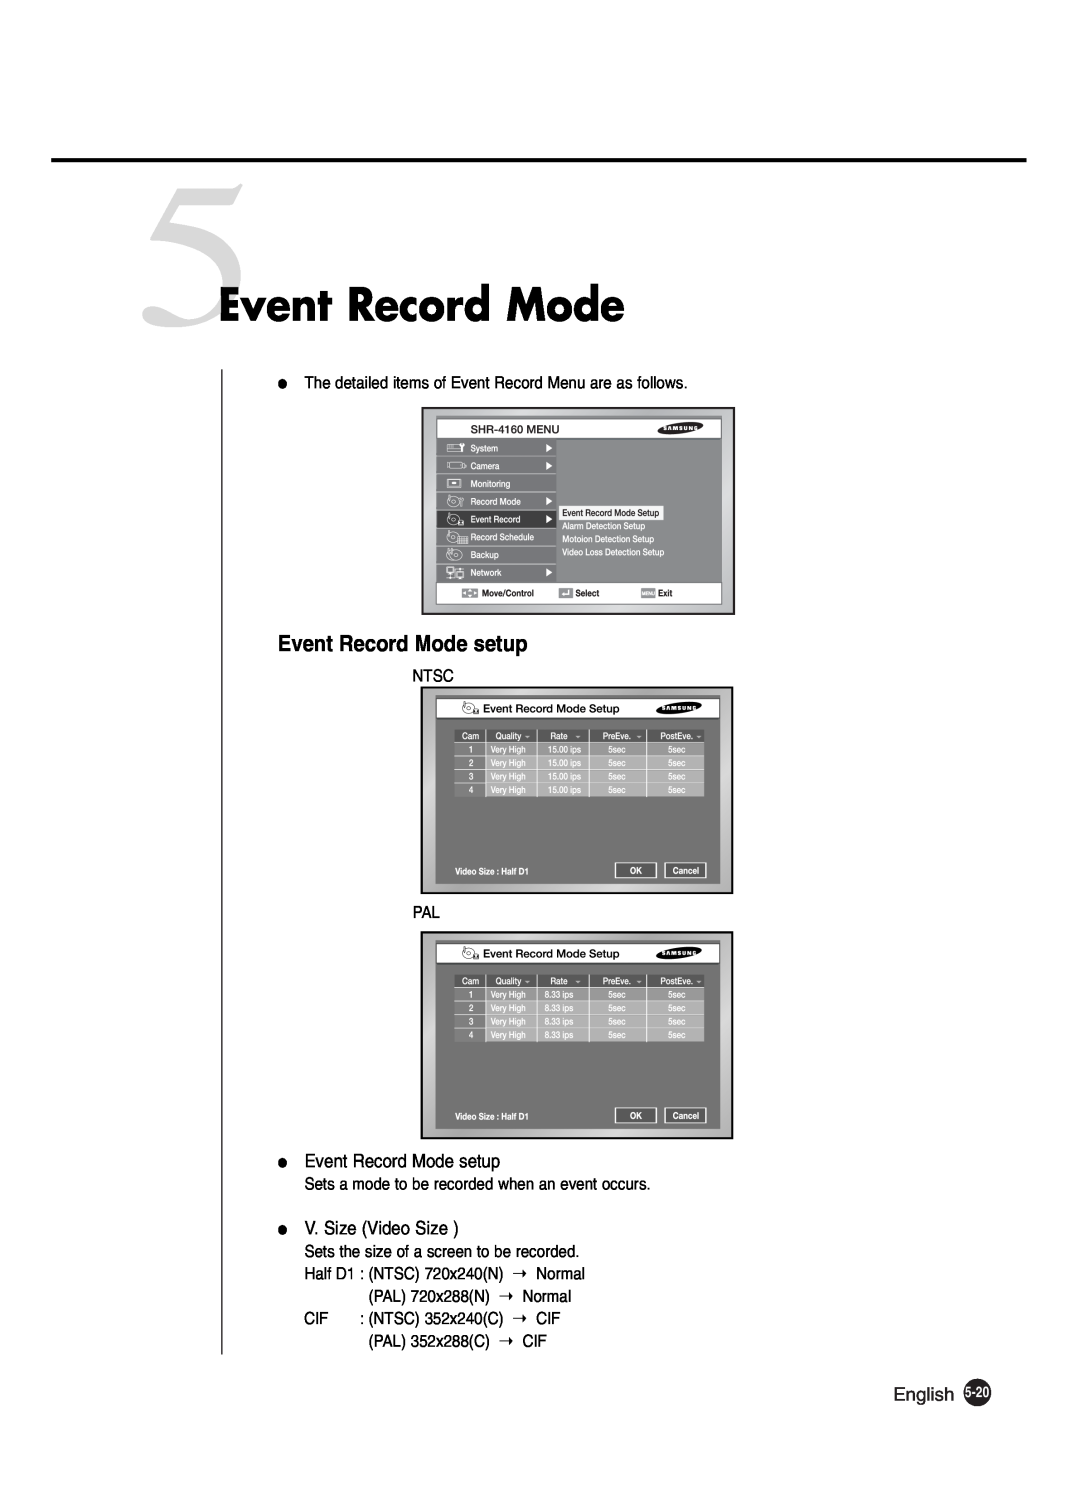 Samsung SHR-2040P250 manual 5Event Record Mode, Event Record Mode setup, English, Ntsc, Half D1 NTSC 720x240N, Normal, Menu 